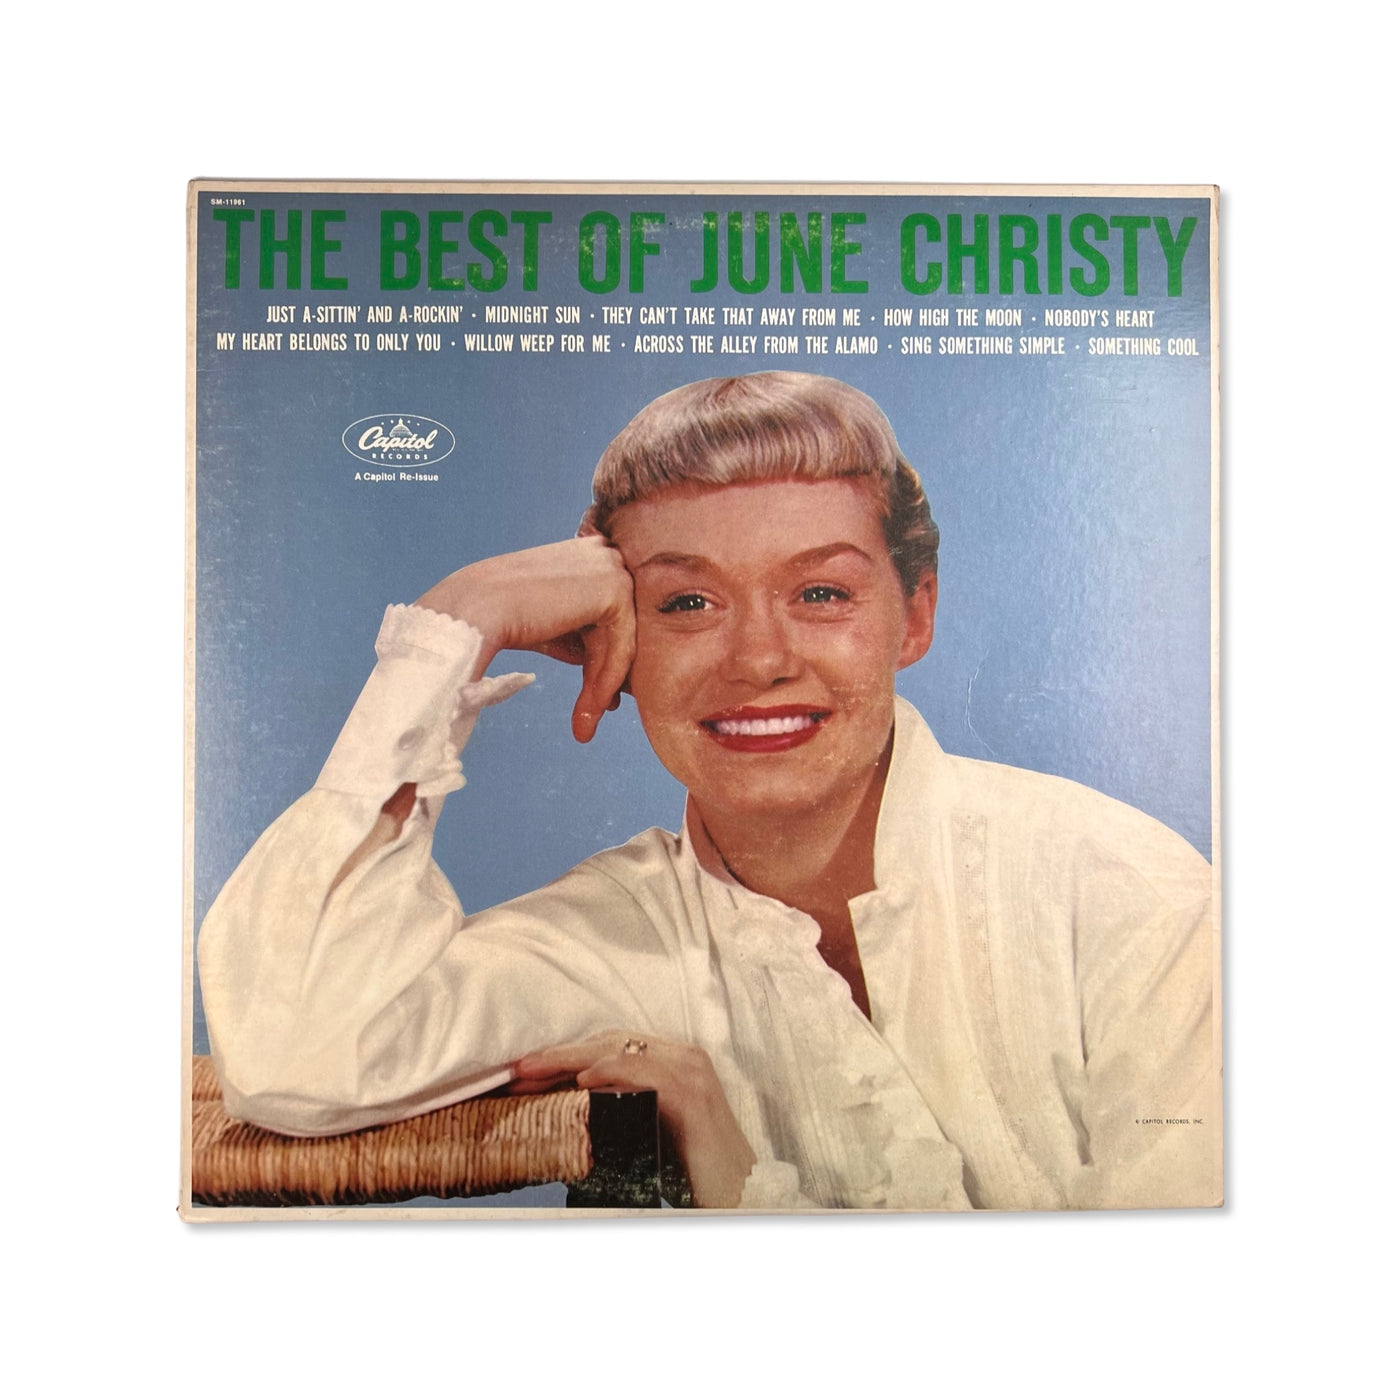 June Christy – The Best Of June Christy